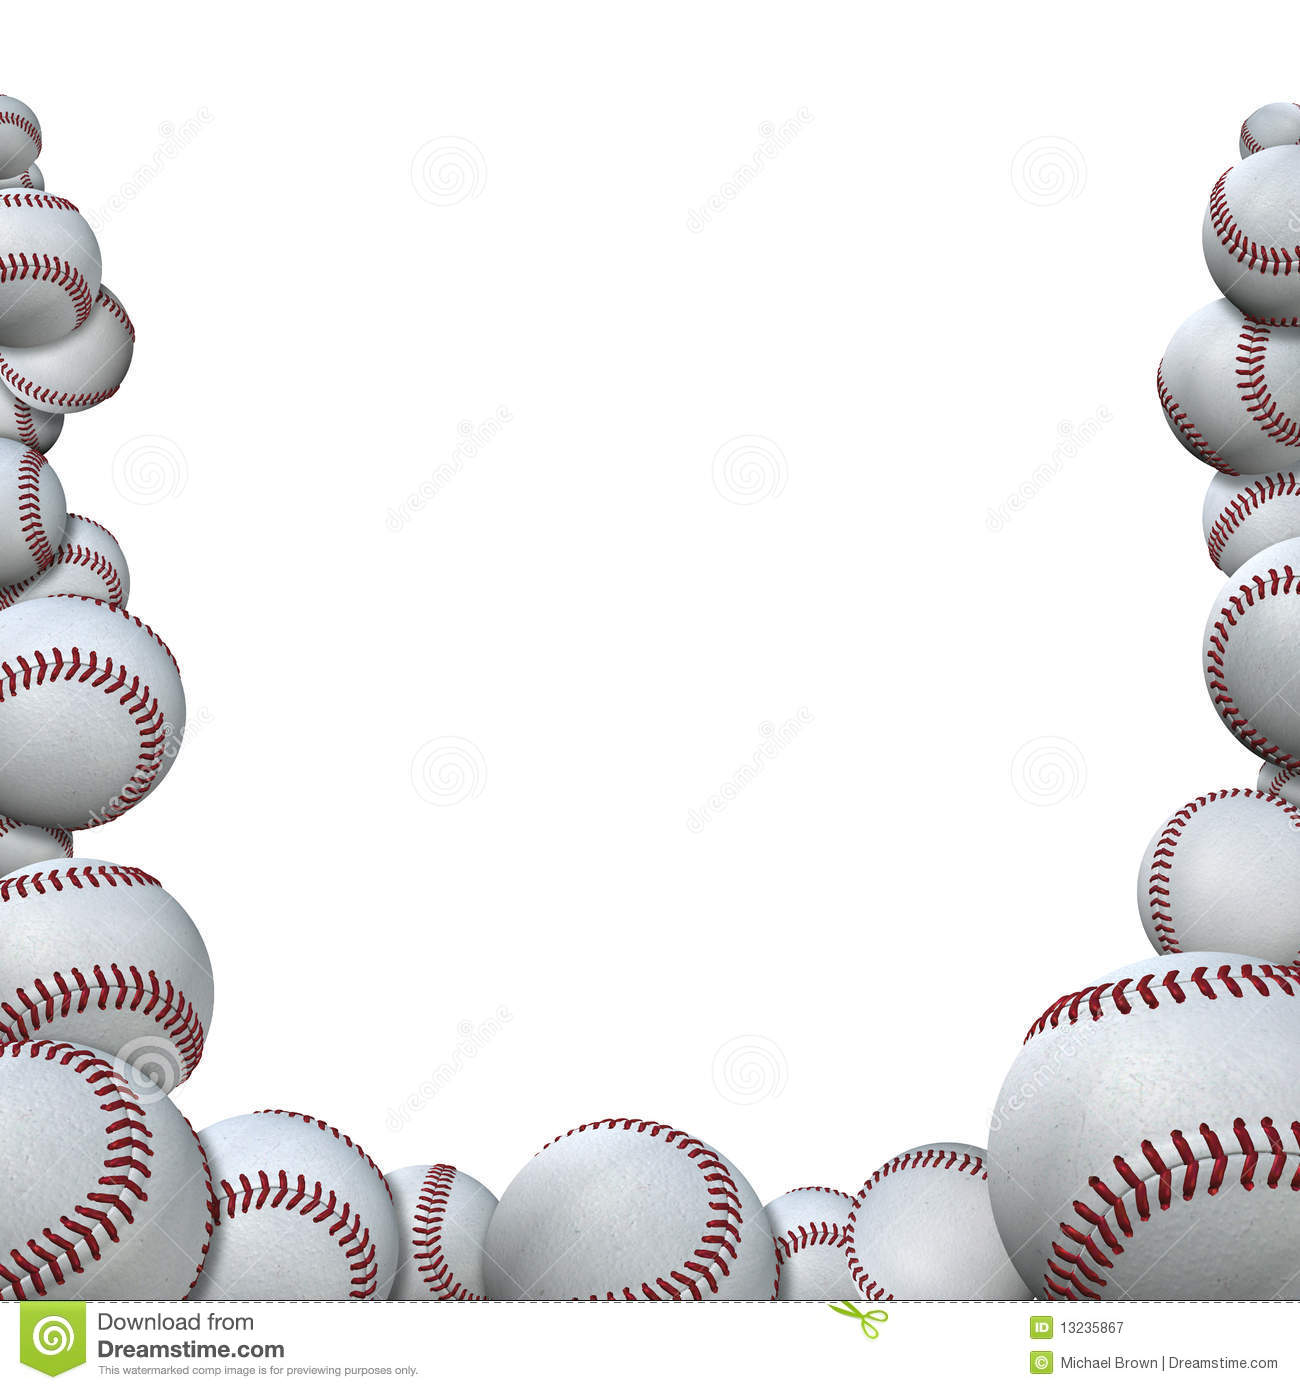 Many Baseballs Form Baseball Season Sports Border Royalty Free Stock